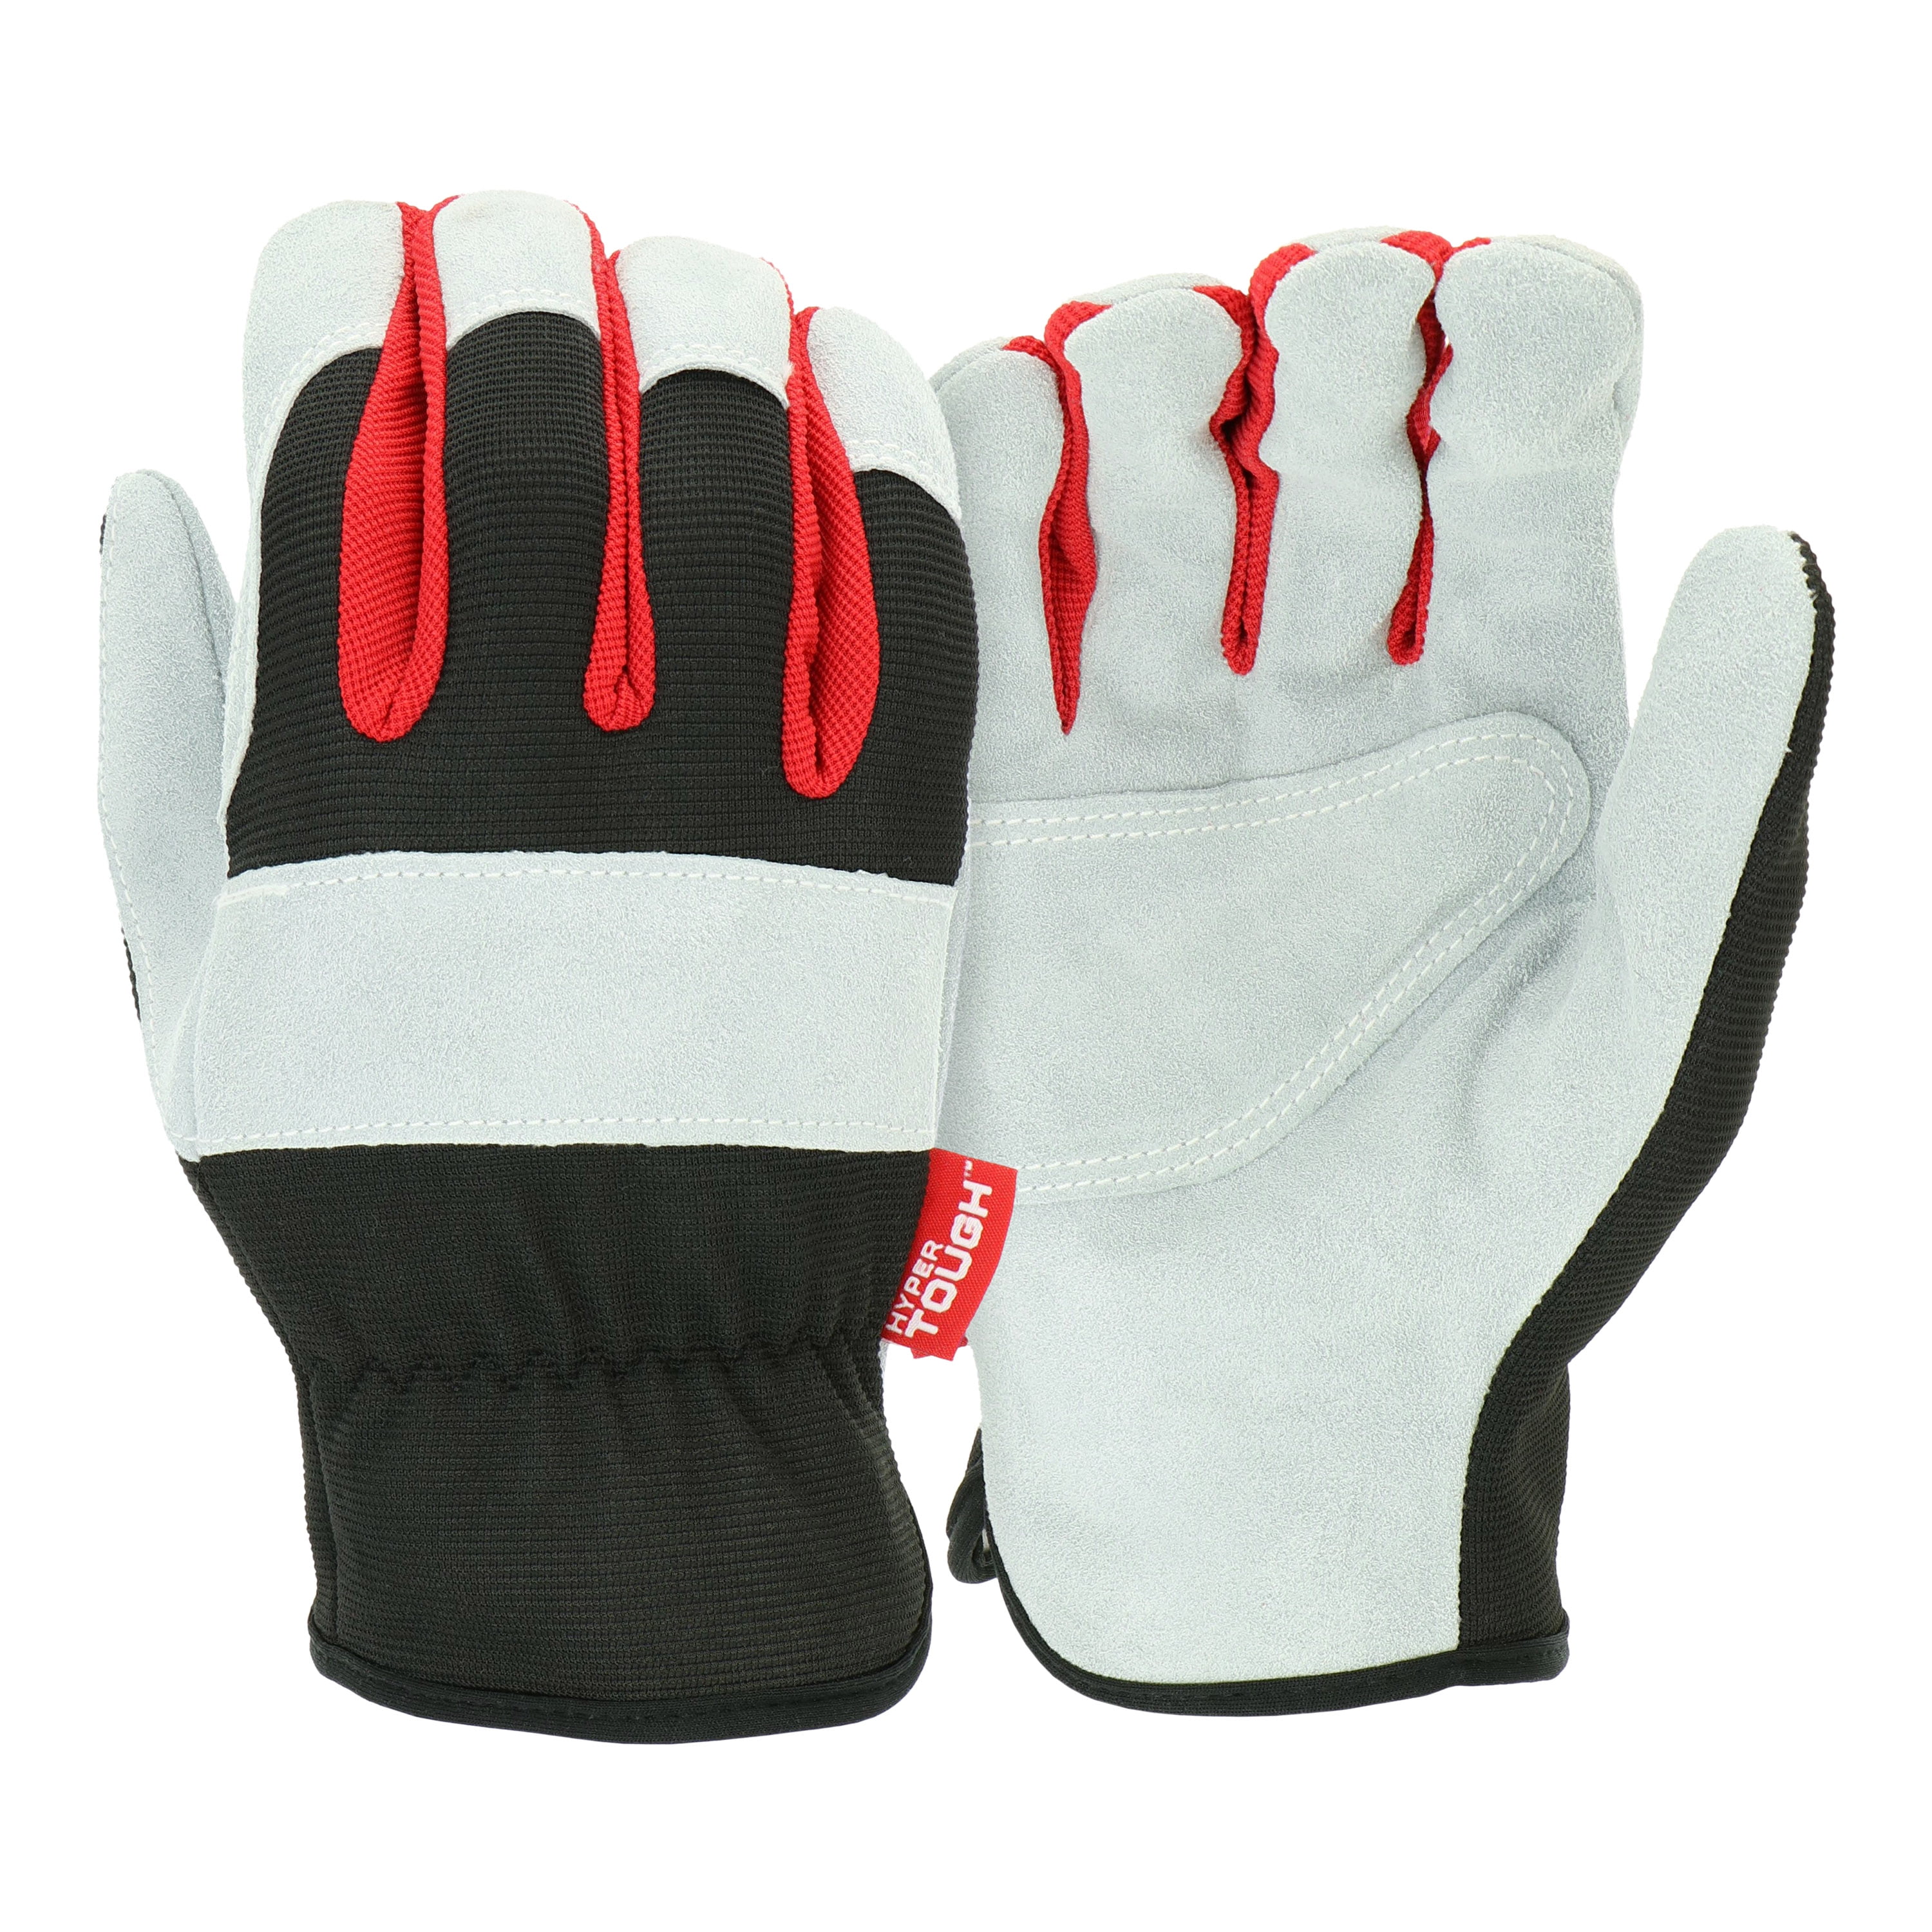 Pair Hyper Tough Grain Leather Men Gloves Elastic Wrist White Large 731919111173